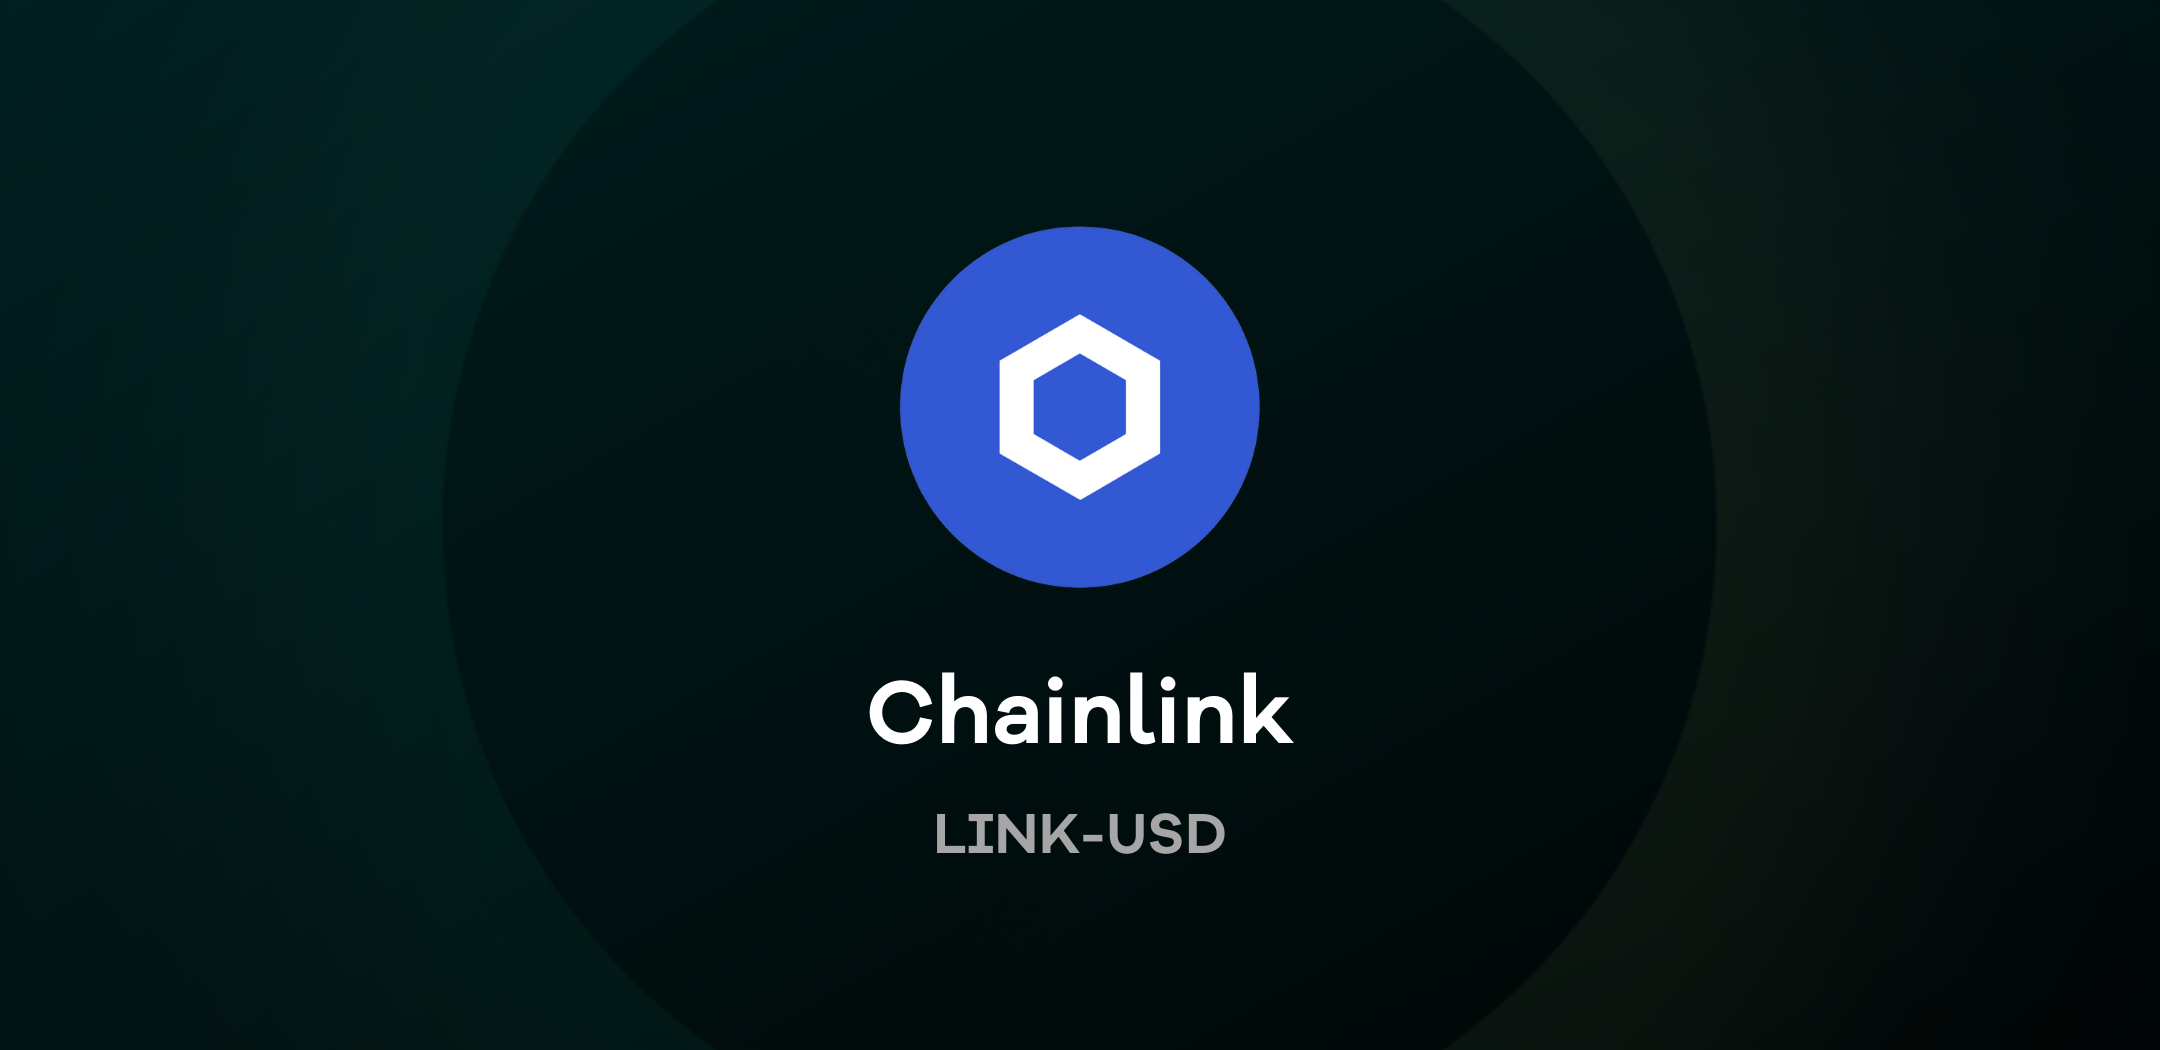 LINK options market now live